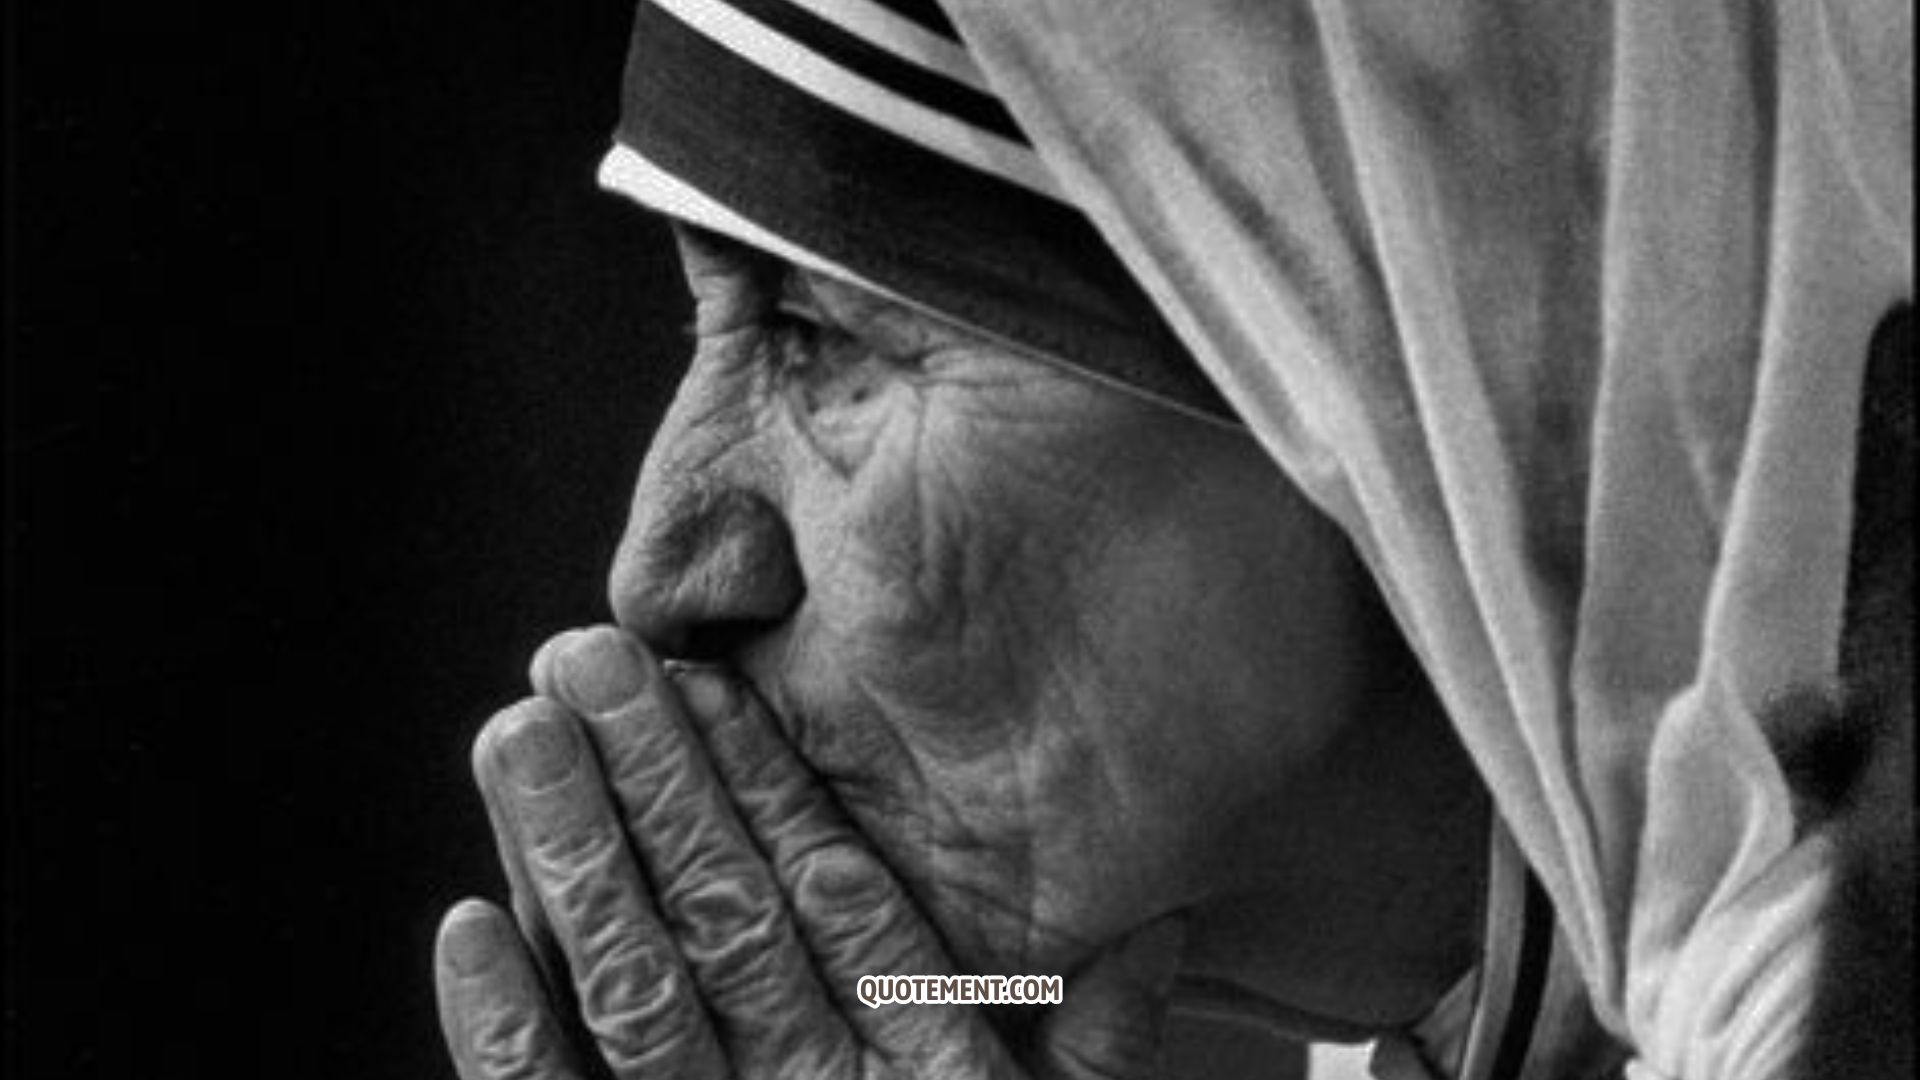 130 grandes frases de la Madre Teresa para un mundo mejor